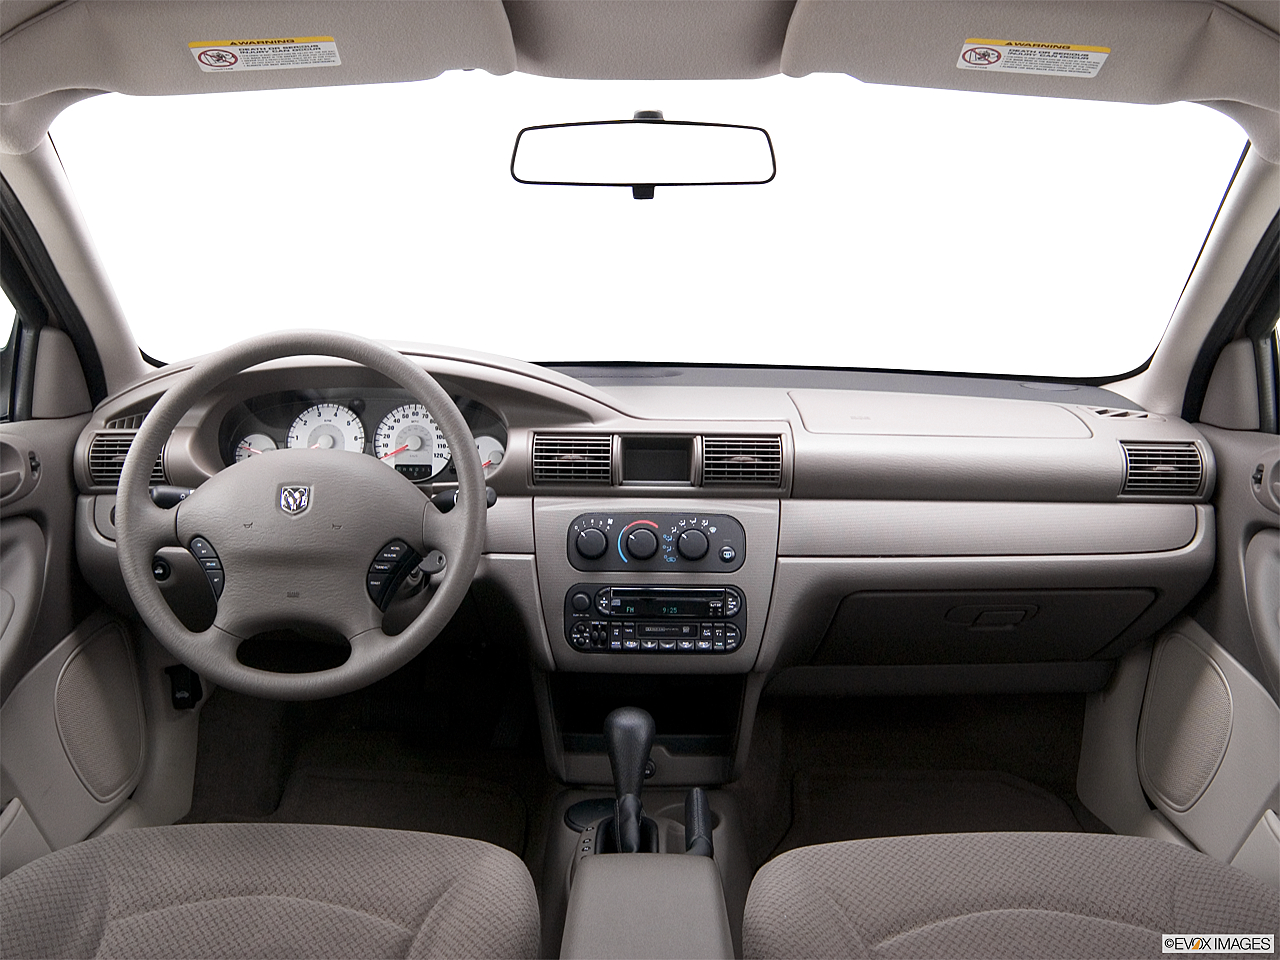 2005 Dodge Stratus R/T 4dr Sedan - Research - GrooveCar